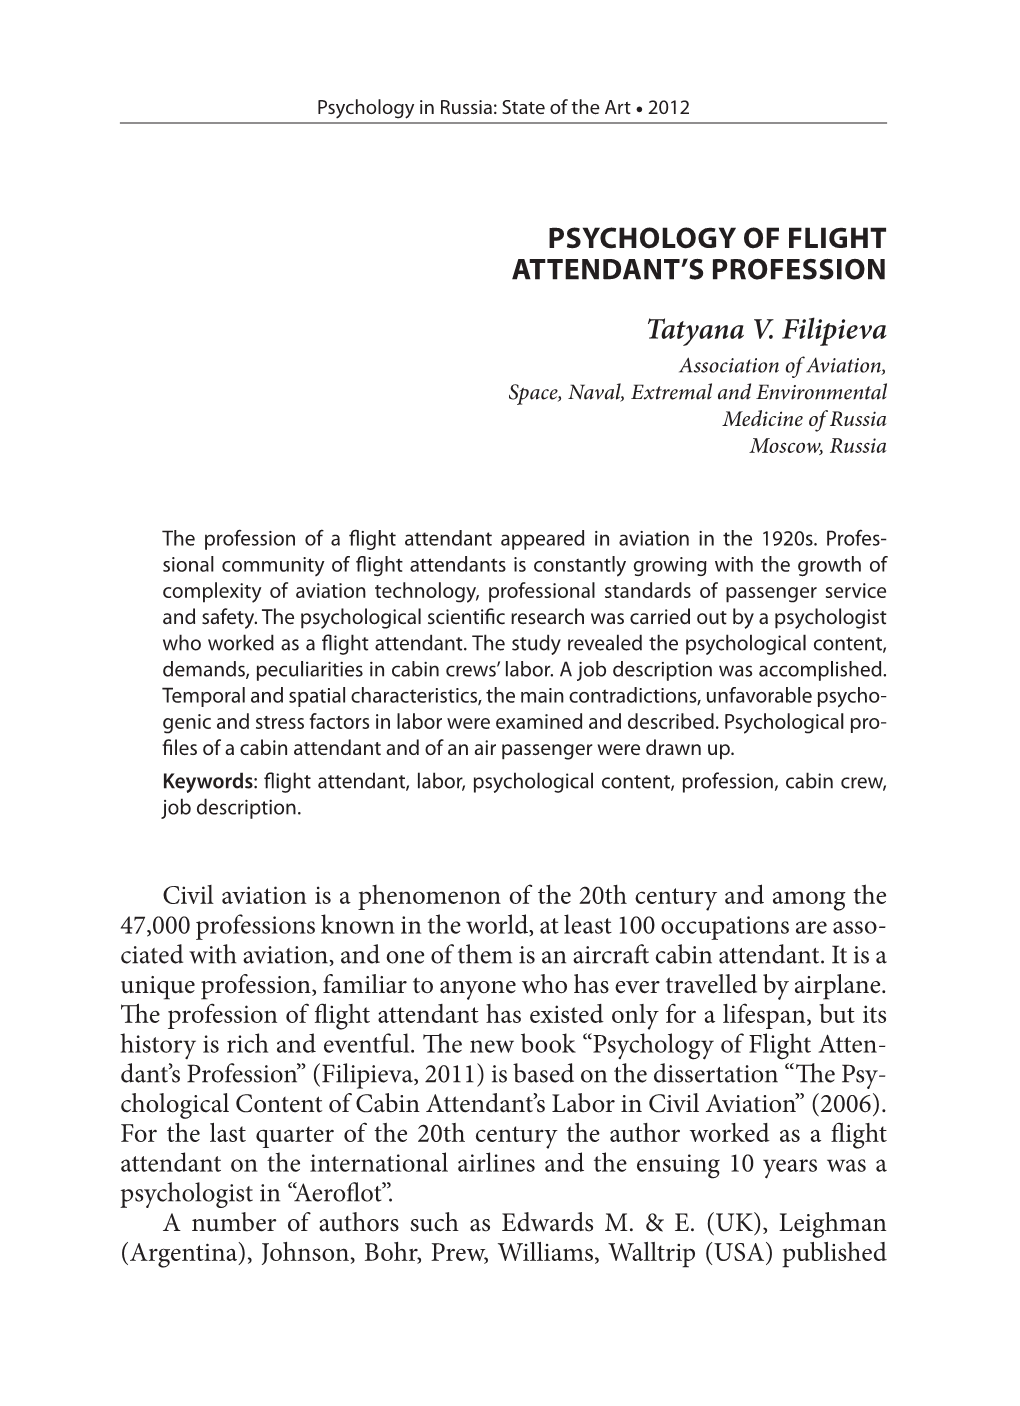 Psychology of Flight Attendant's Profession